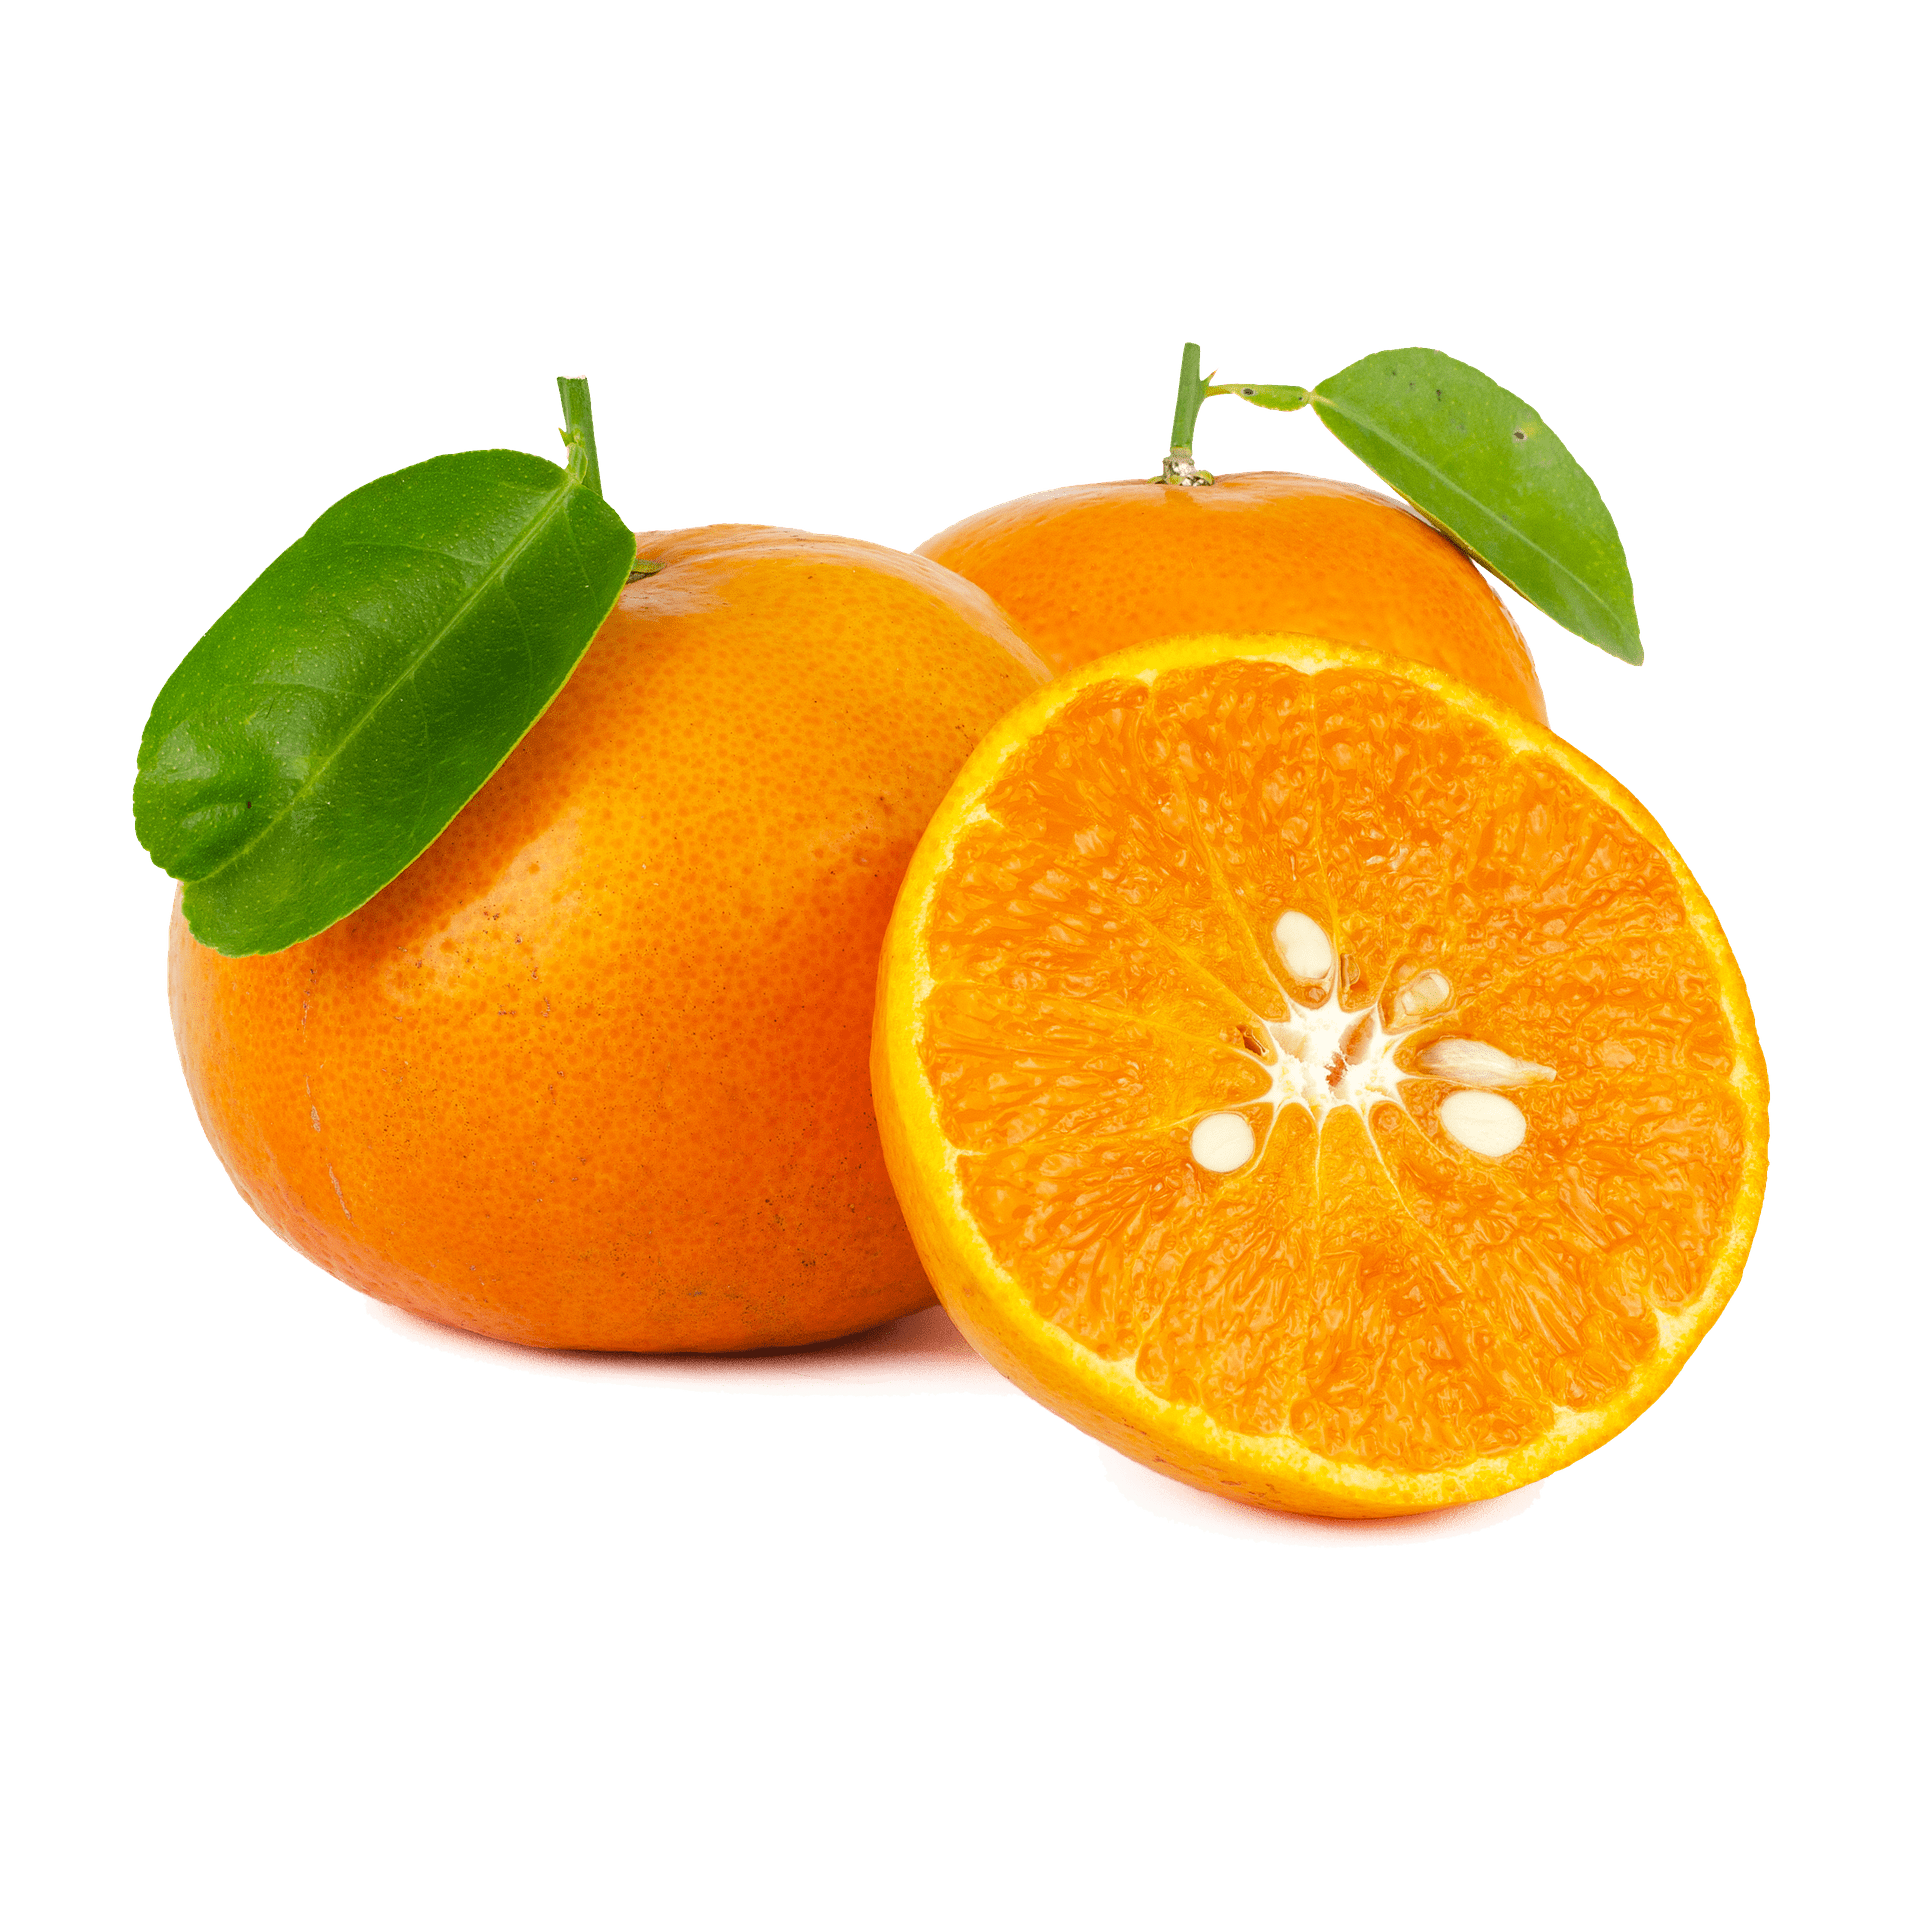 Мандарин фрукт витамины. Апельсин Fresh Citrus. Egyptian Citrus мандарины. Орендж апельсин а мандарин. Апельсин на белом фоне.